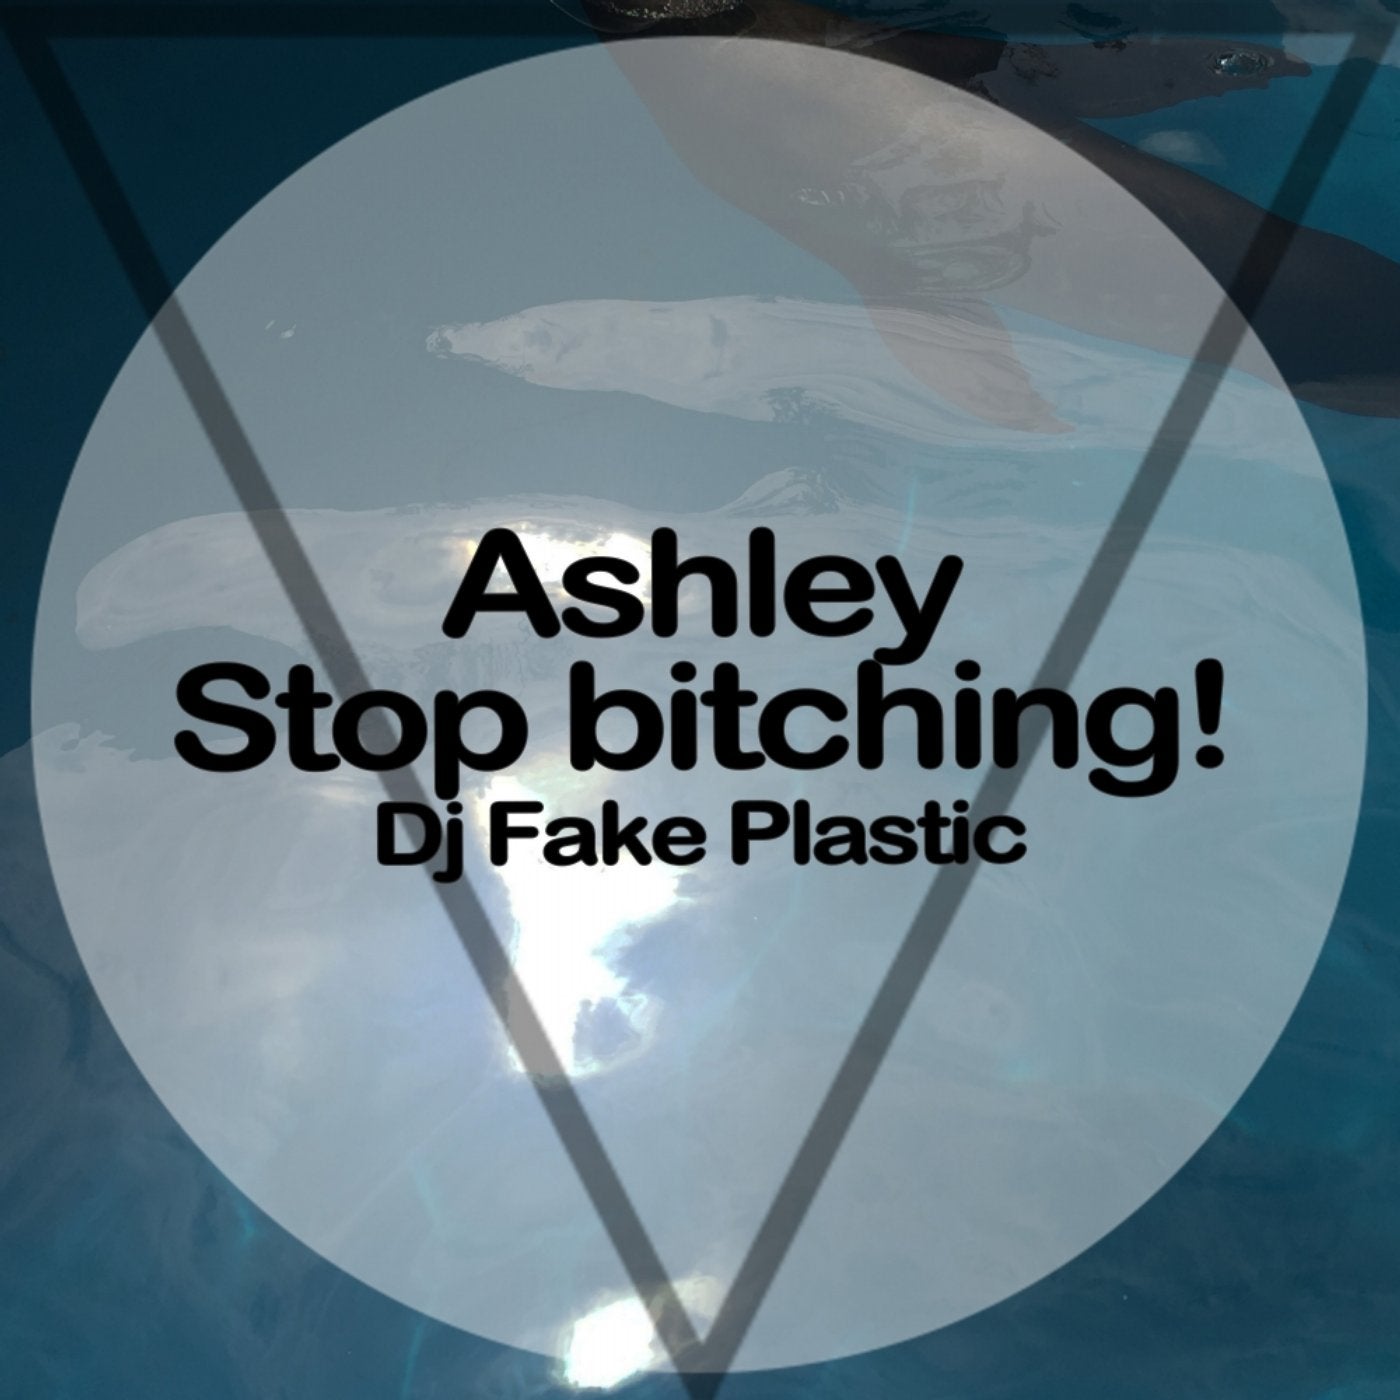 Ashley, Stop Bitching!